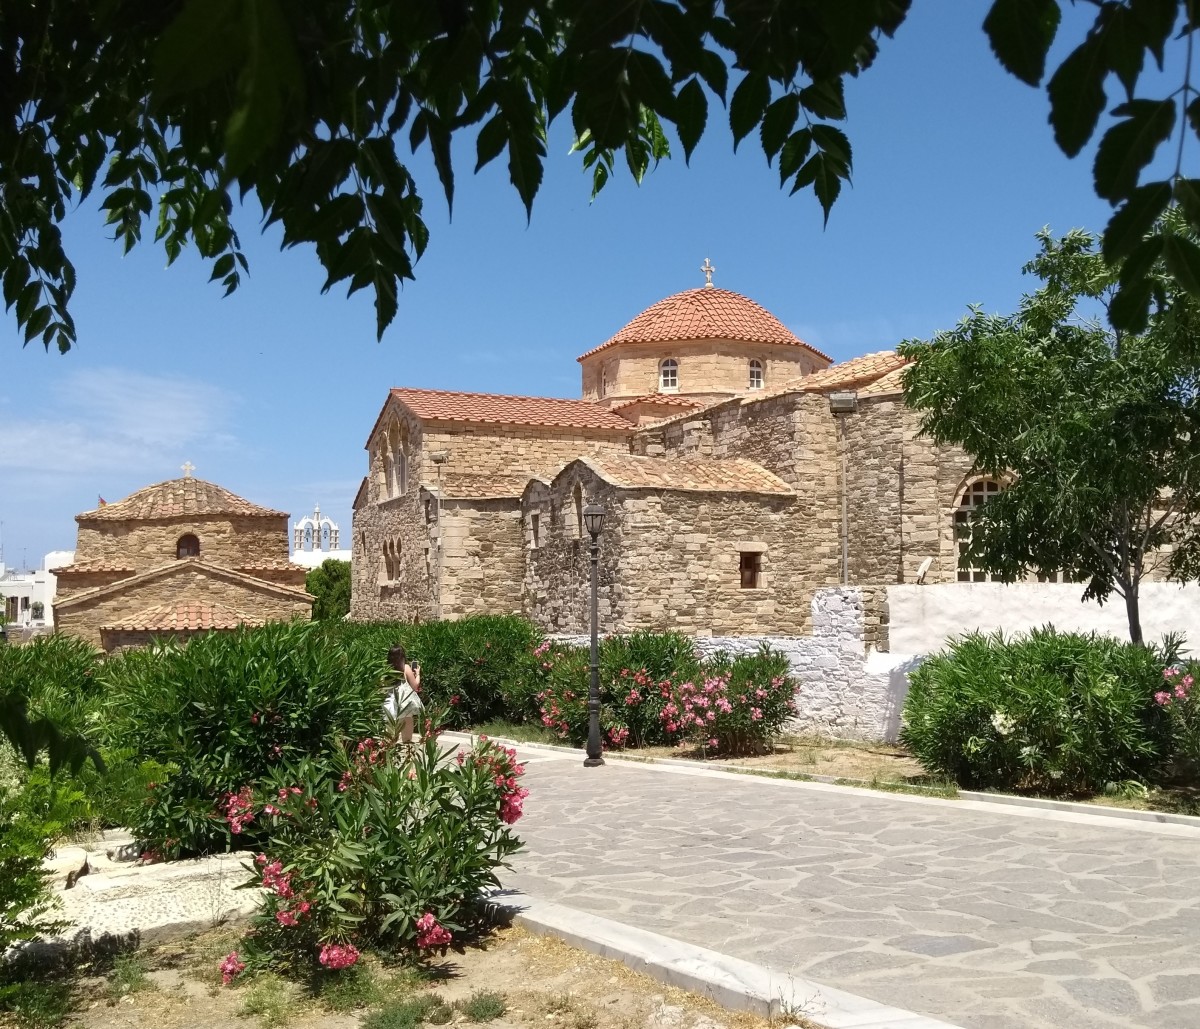 Panagia Ekatontapiliani (the church with 100 doors) . A 4th century, Byzantine-era church in Parikia.